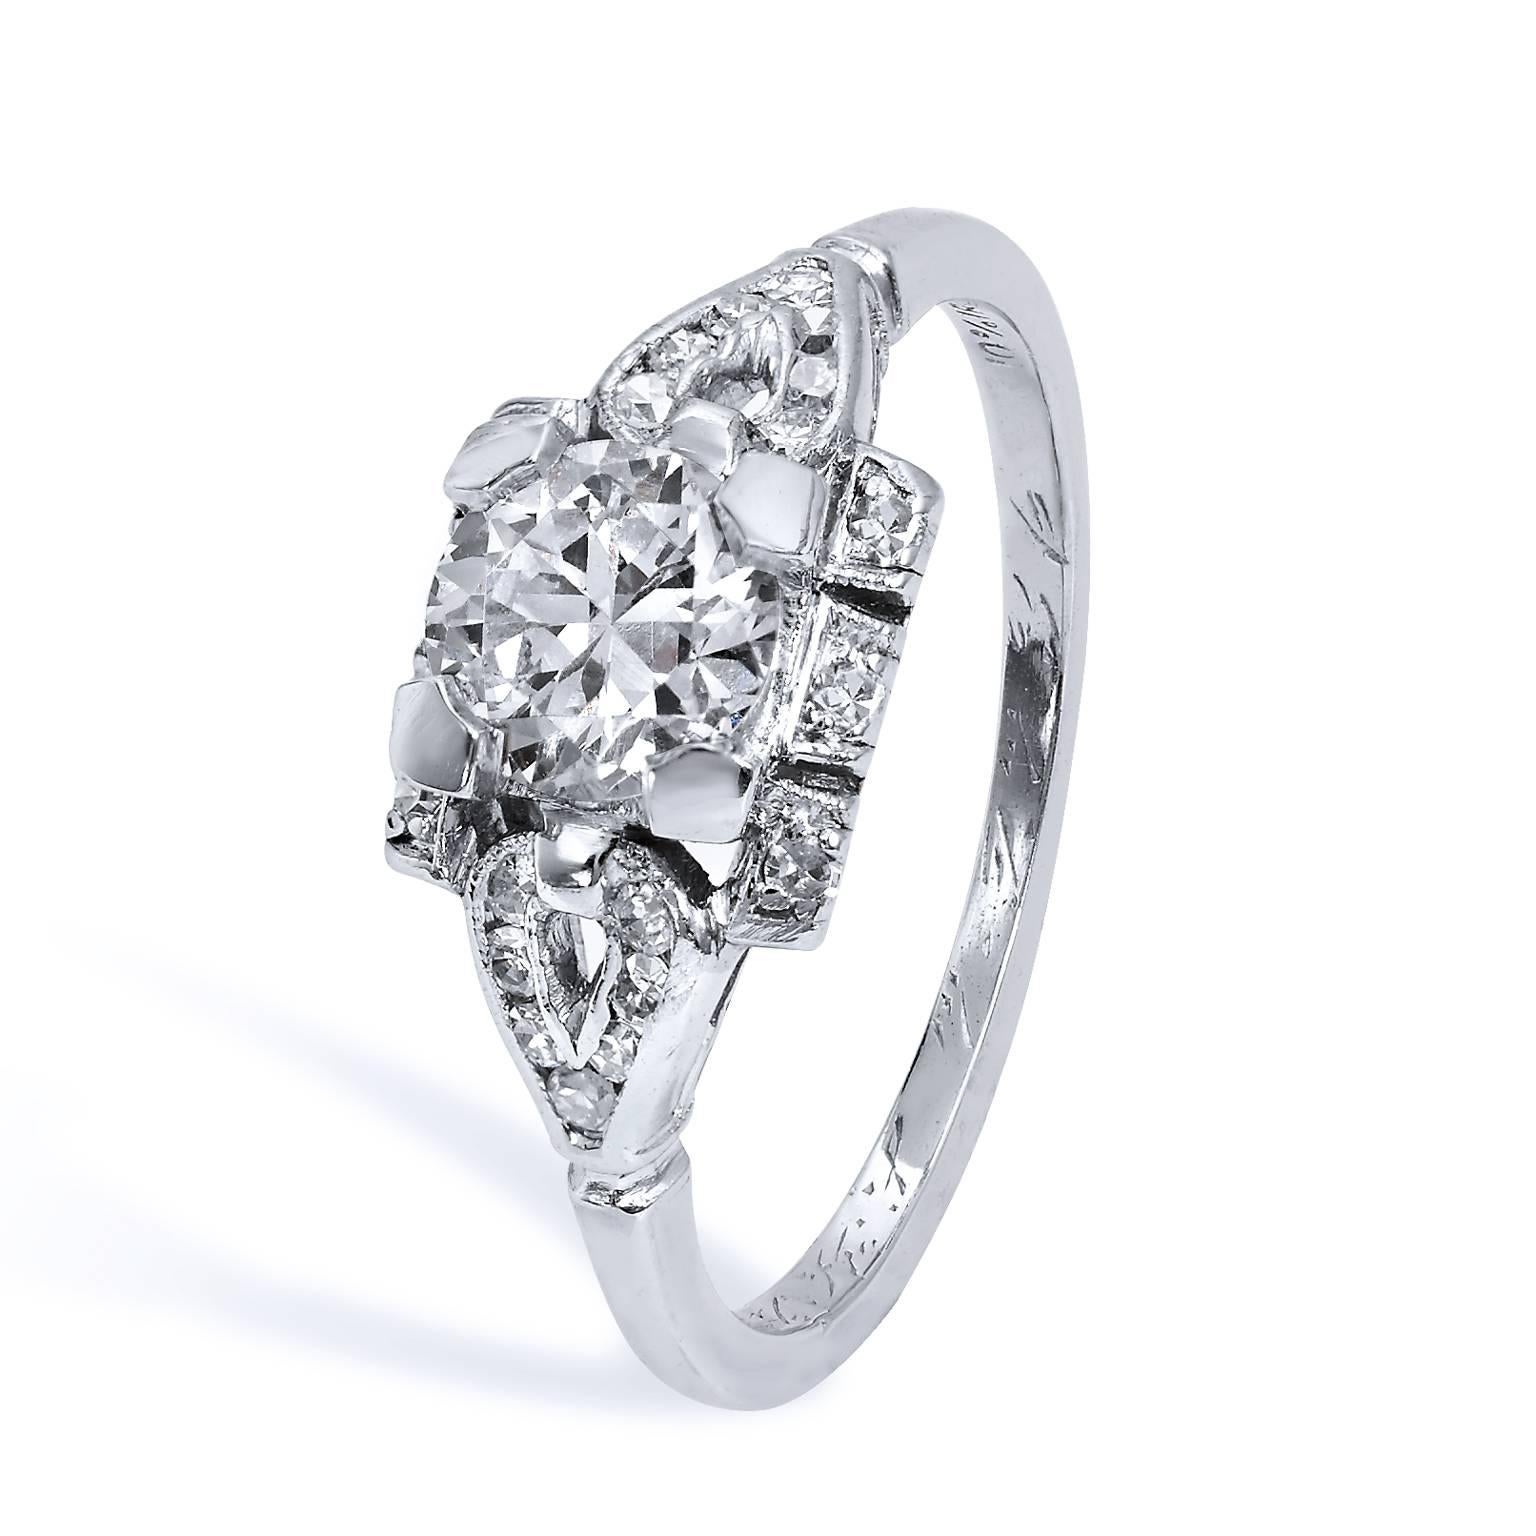 5.5 carat diamond ring